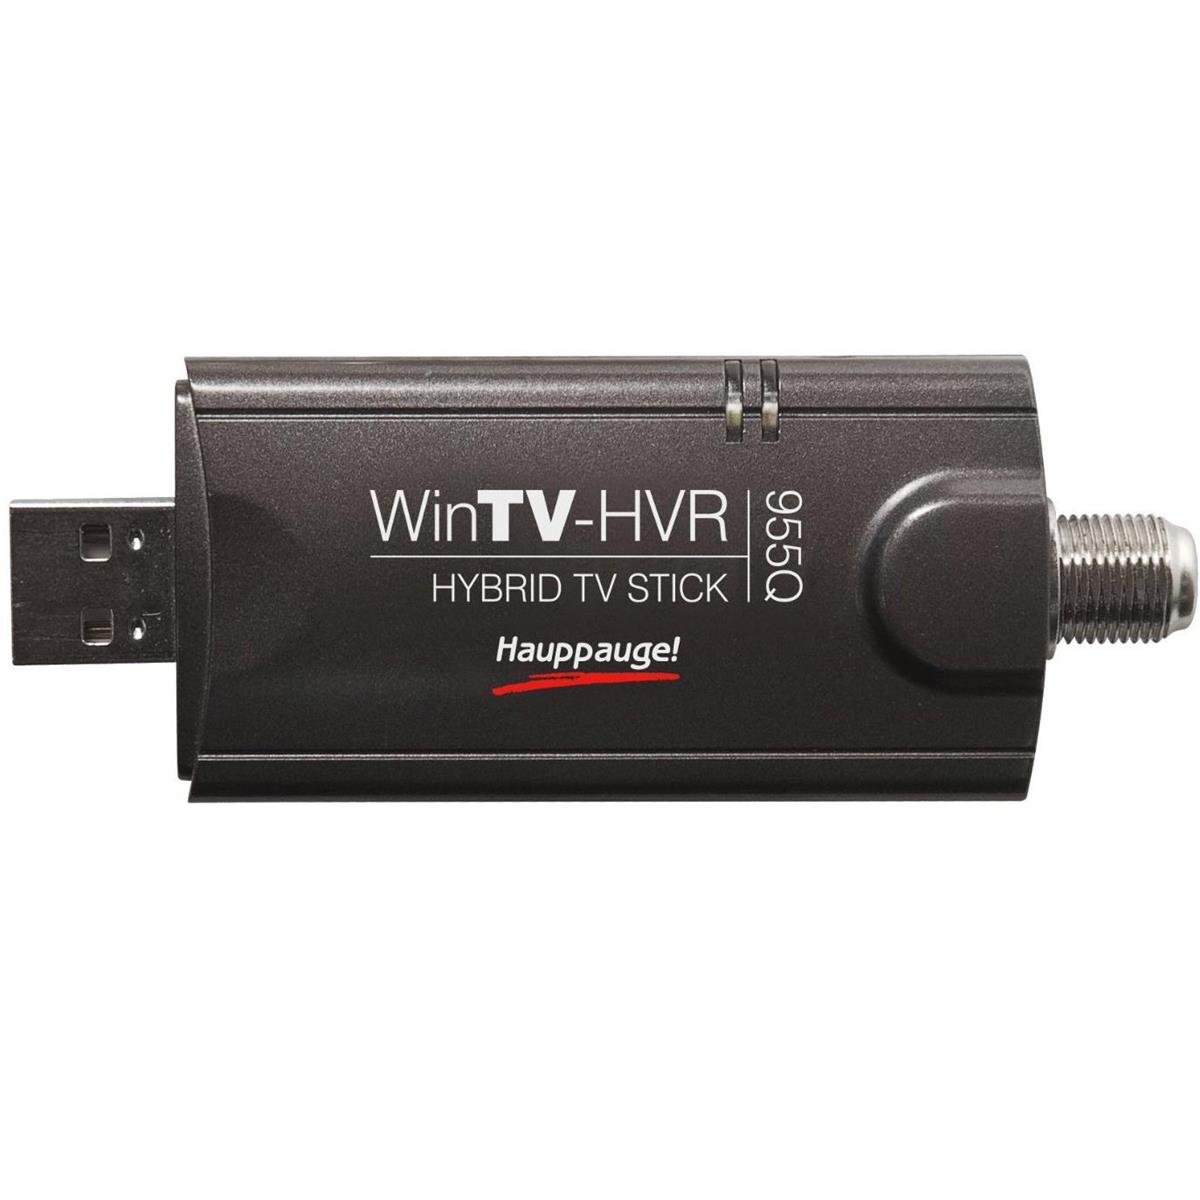 Image of Hauppauge WinTV-HVR-955Q USB TV Tuner